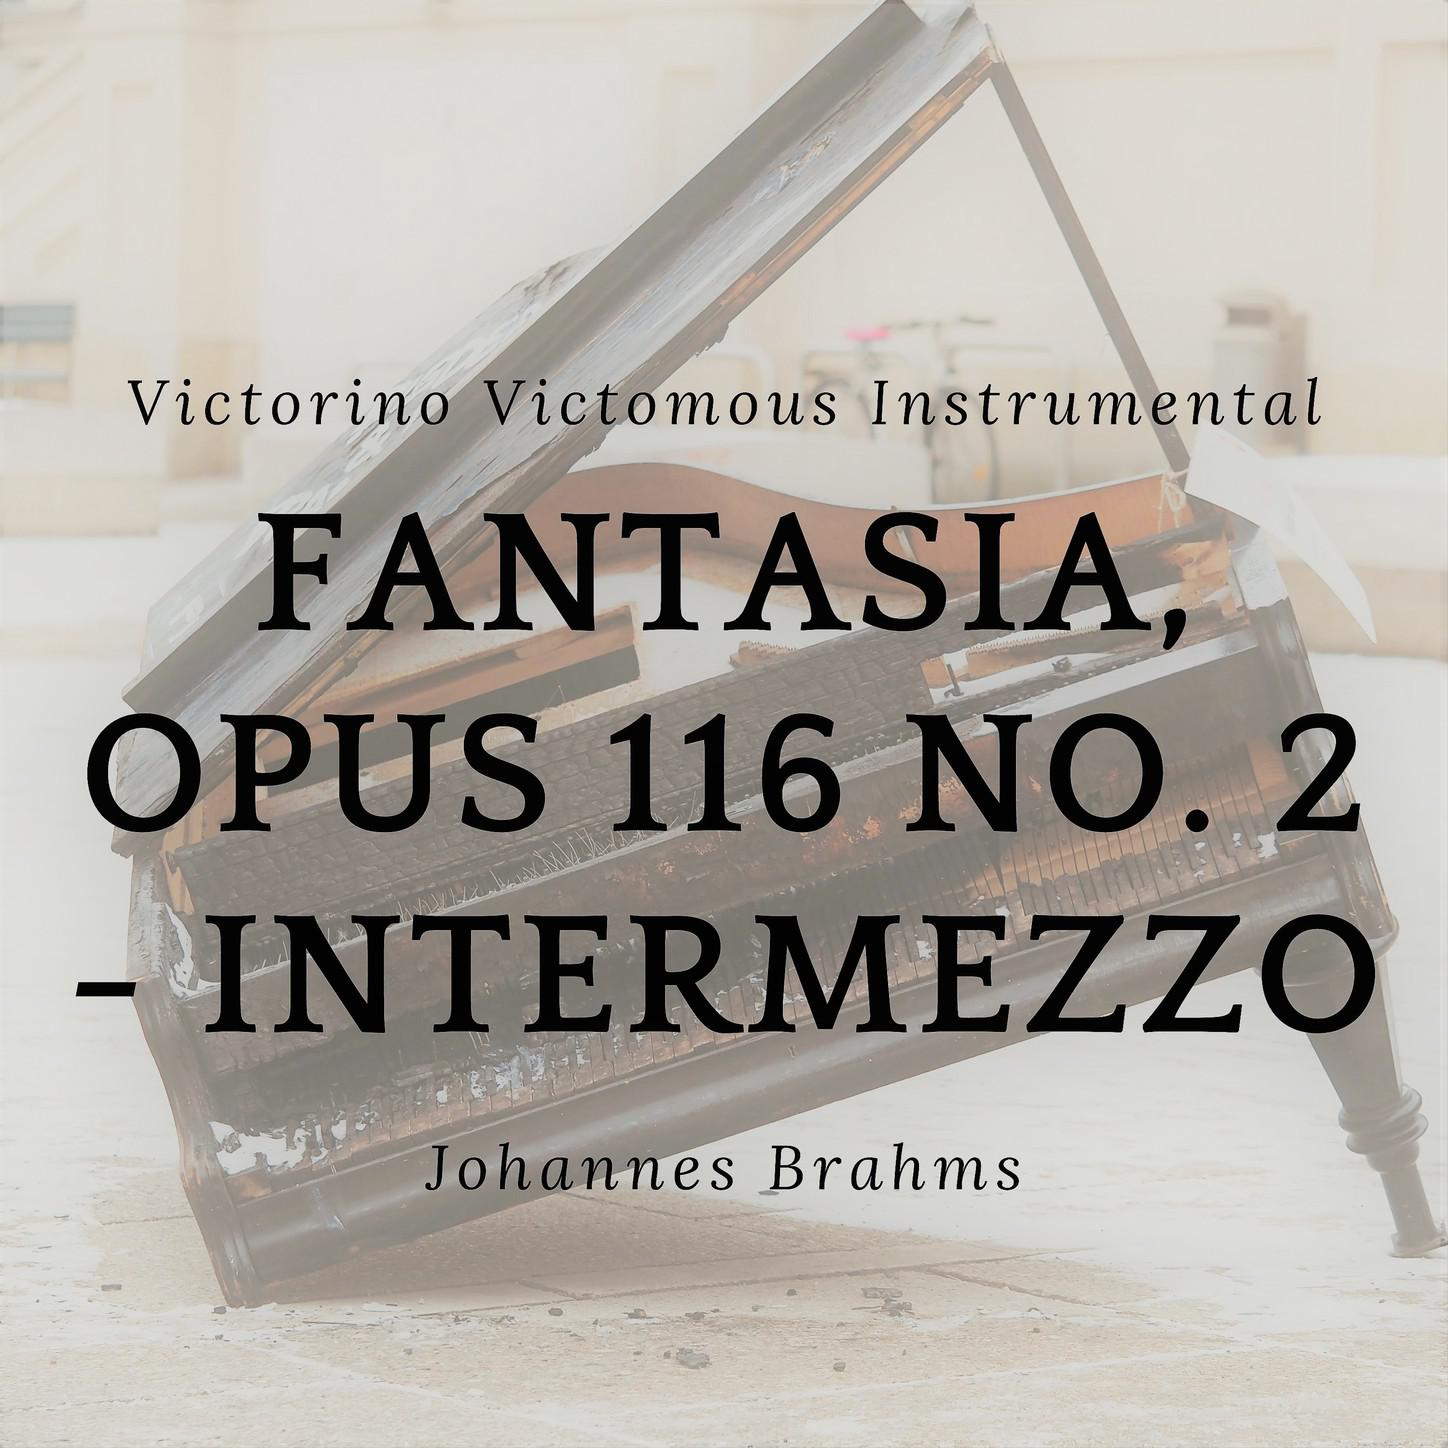 Fantasia, Opus 116 No. 2 - Intermezzo Andante